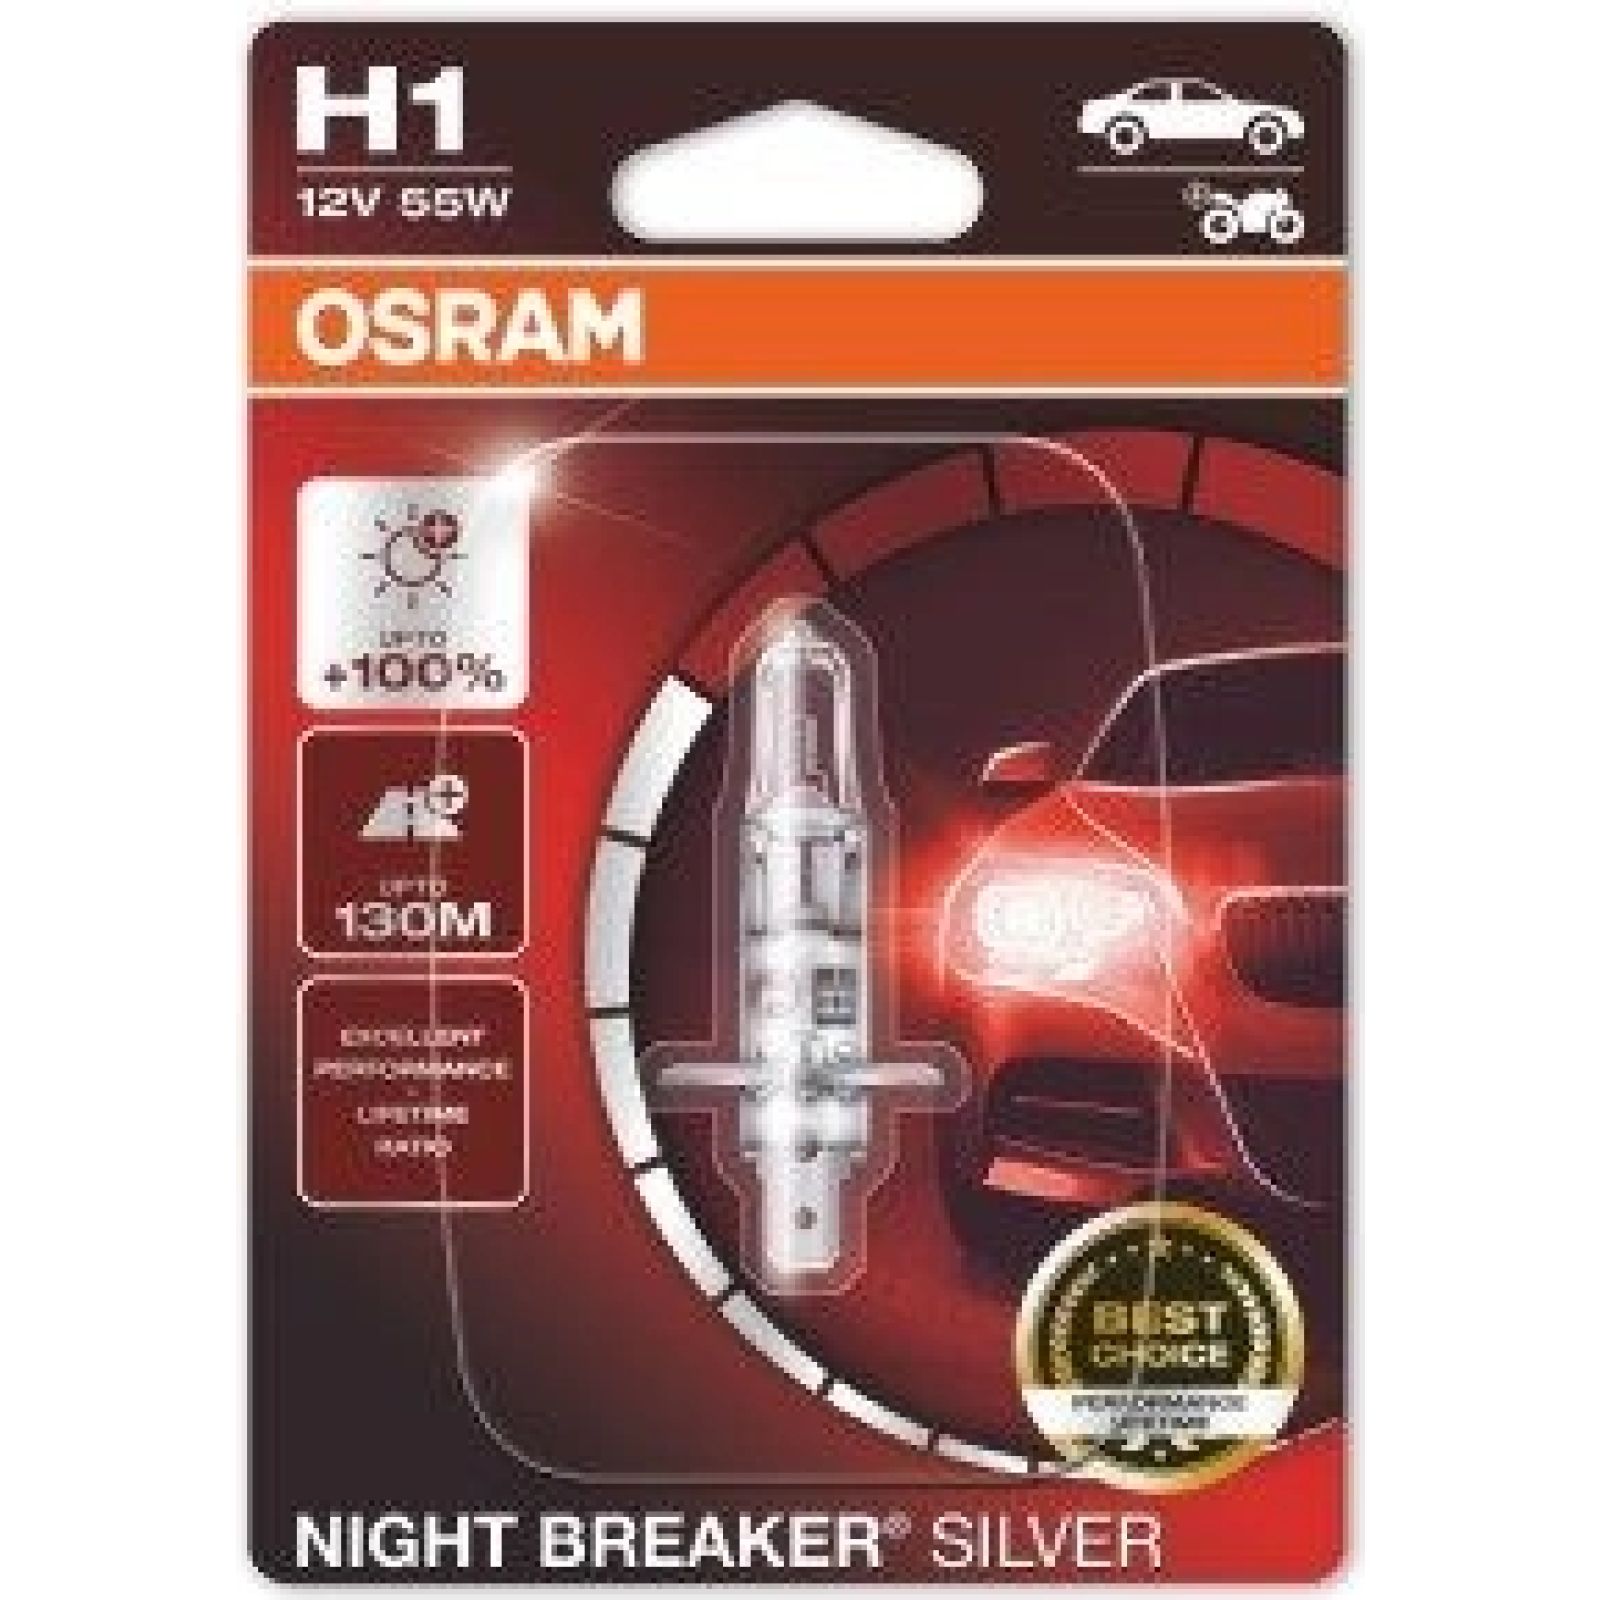 H1 Osram, 12V 55W P14.5S NBS, Night Breaker Silver